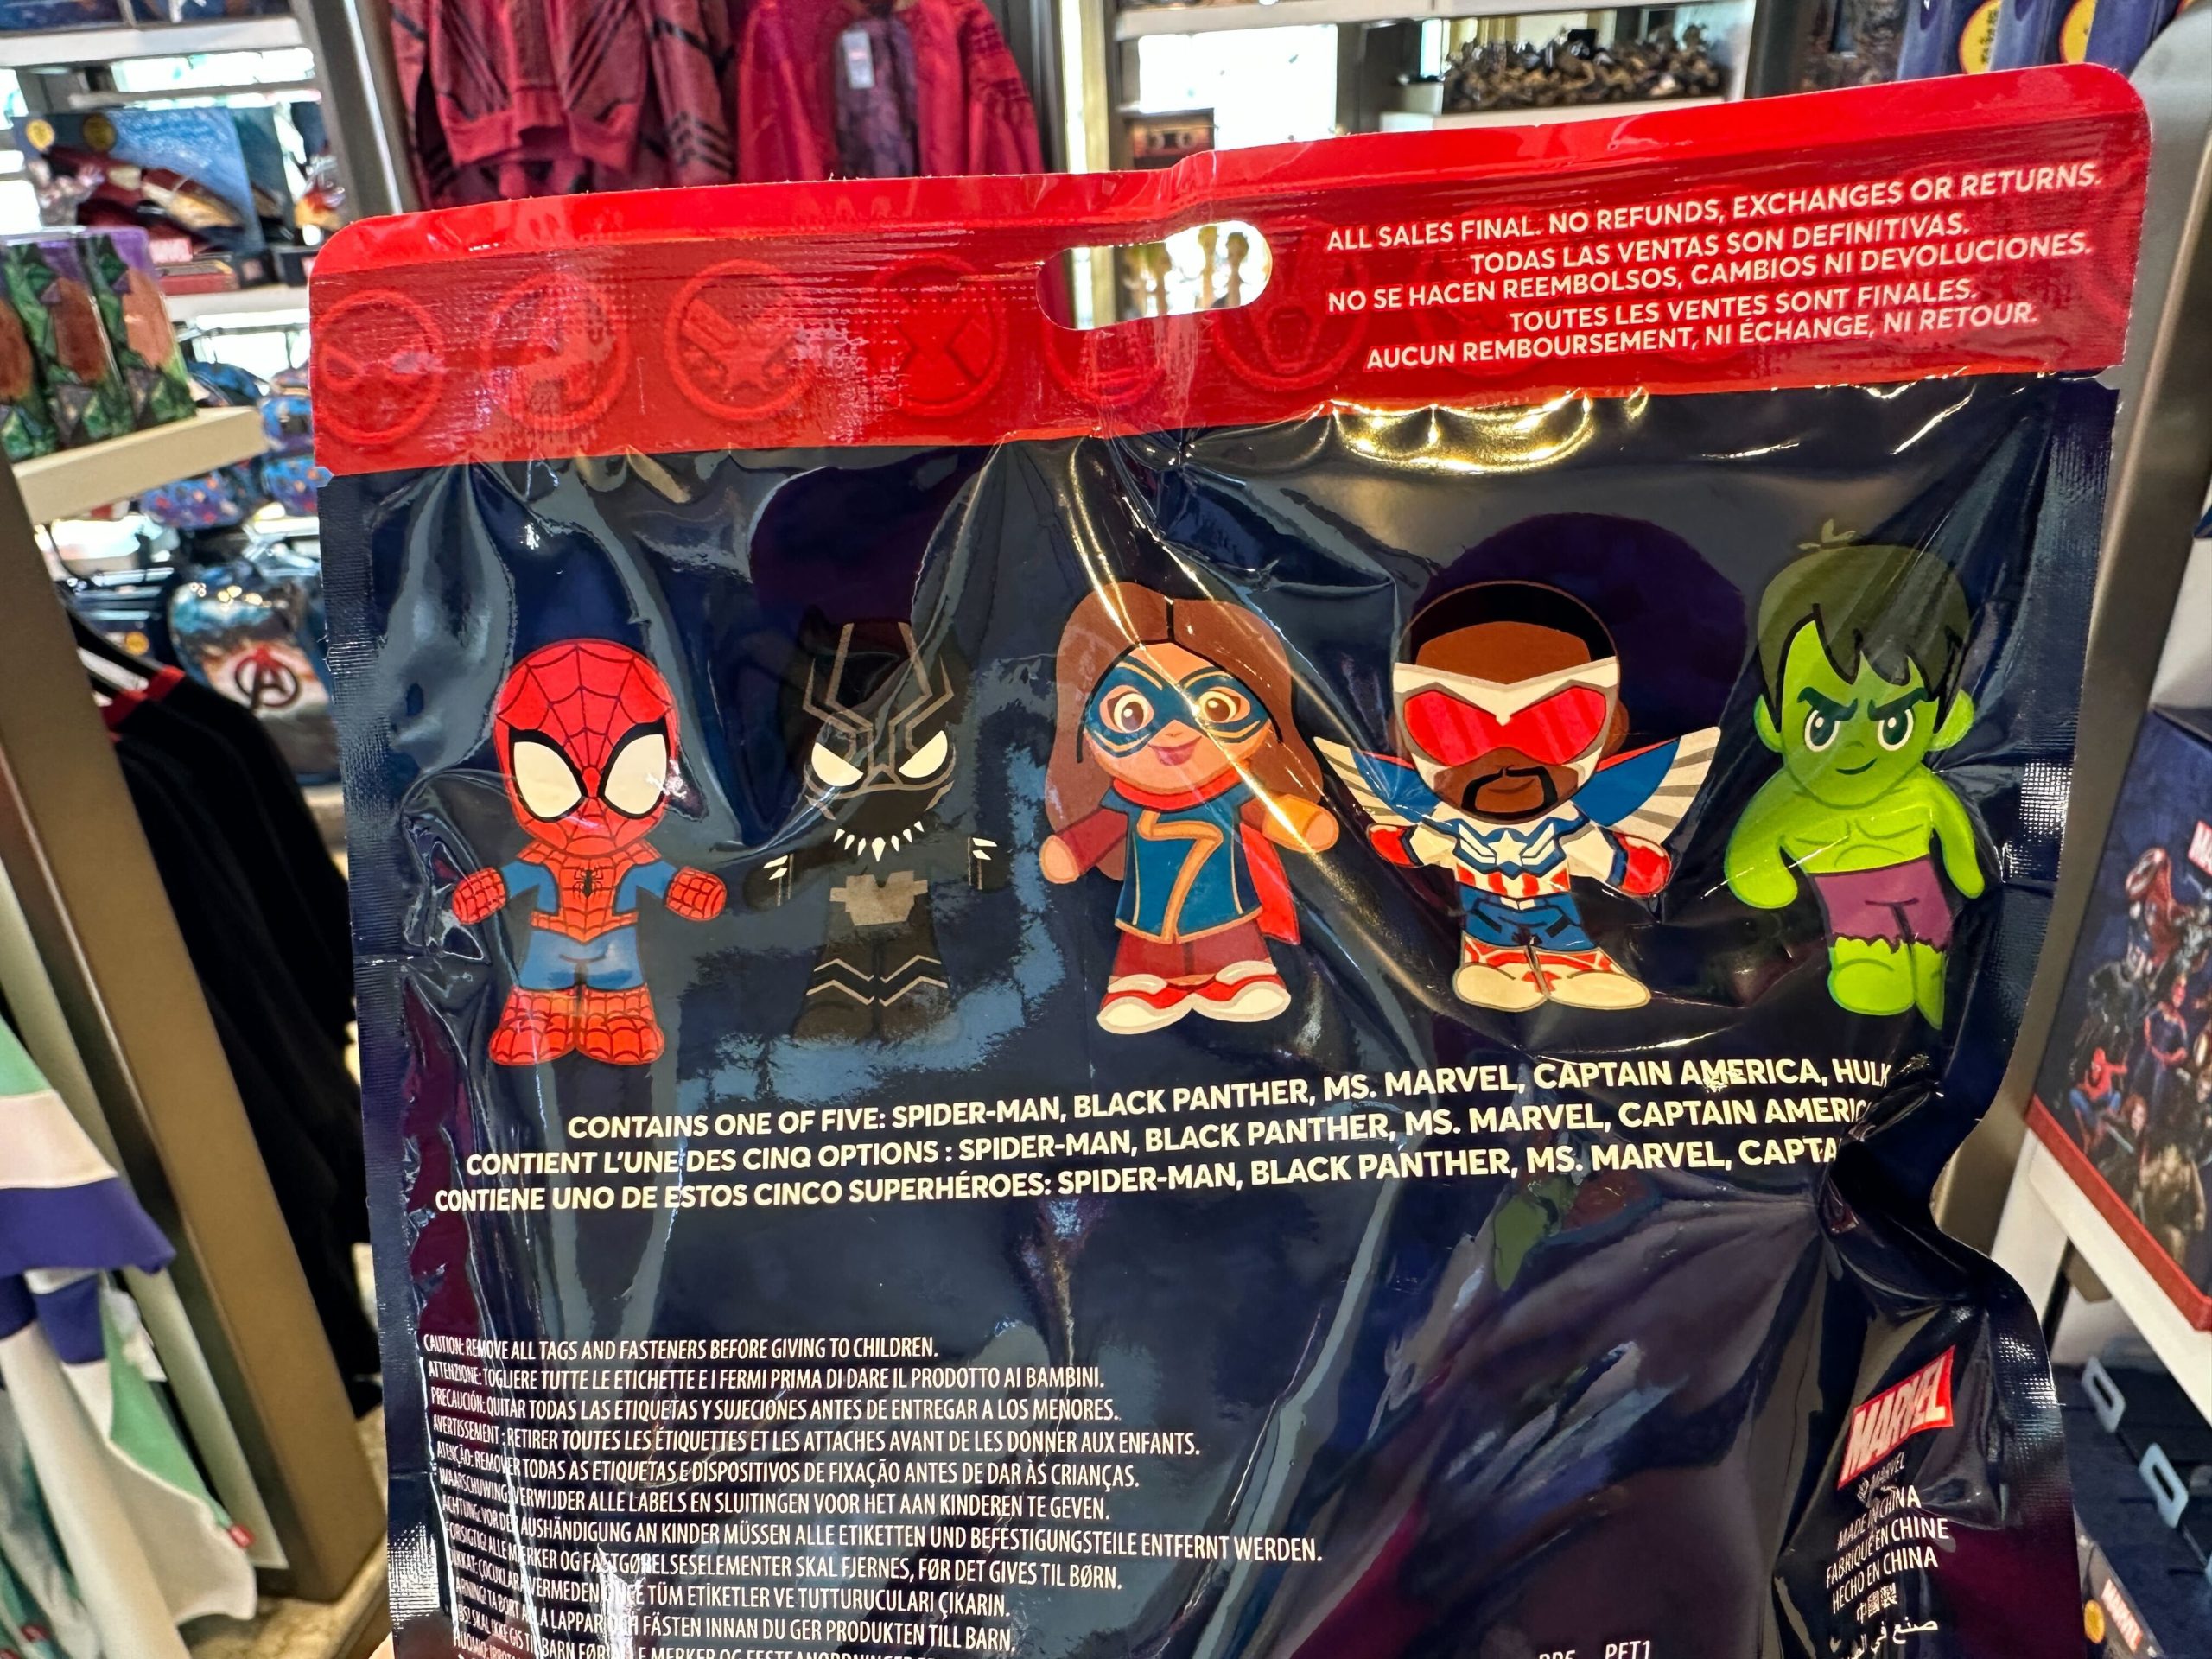 Marvel Super Heroes Plushes